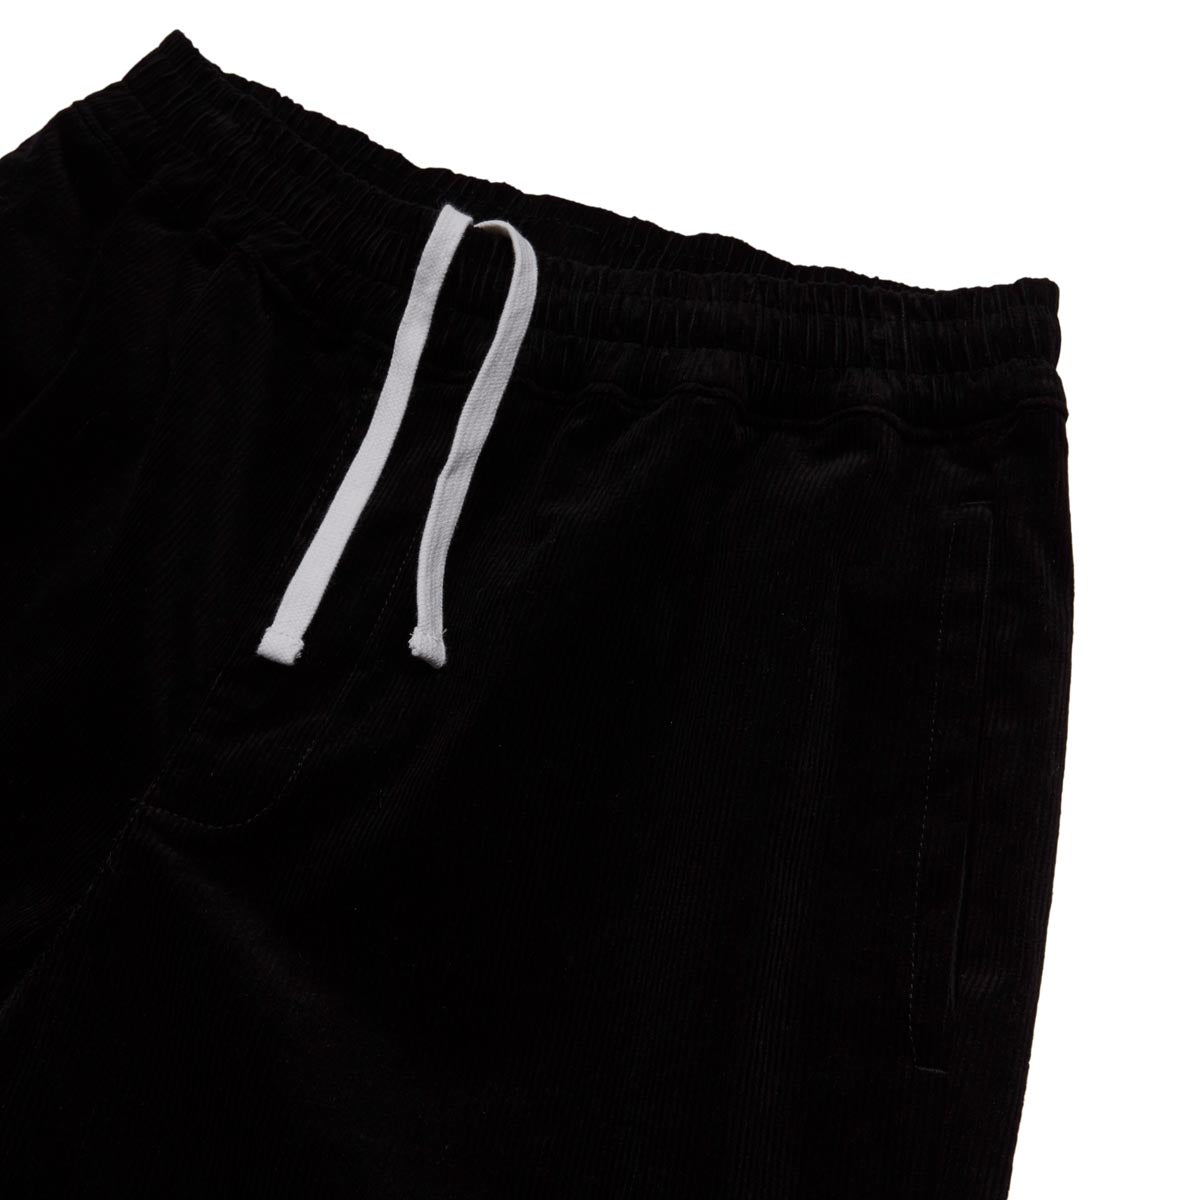 DGK Stay True Corduroy Pants - Black image 4